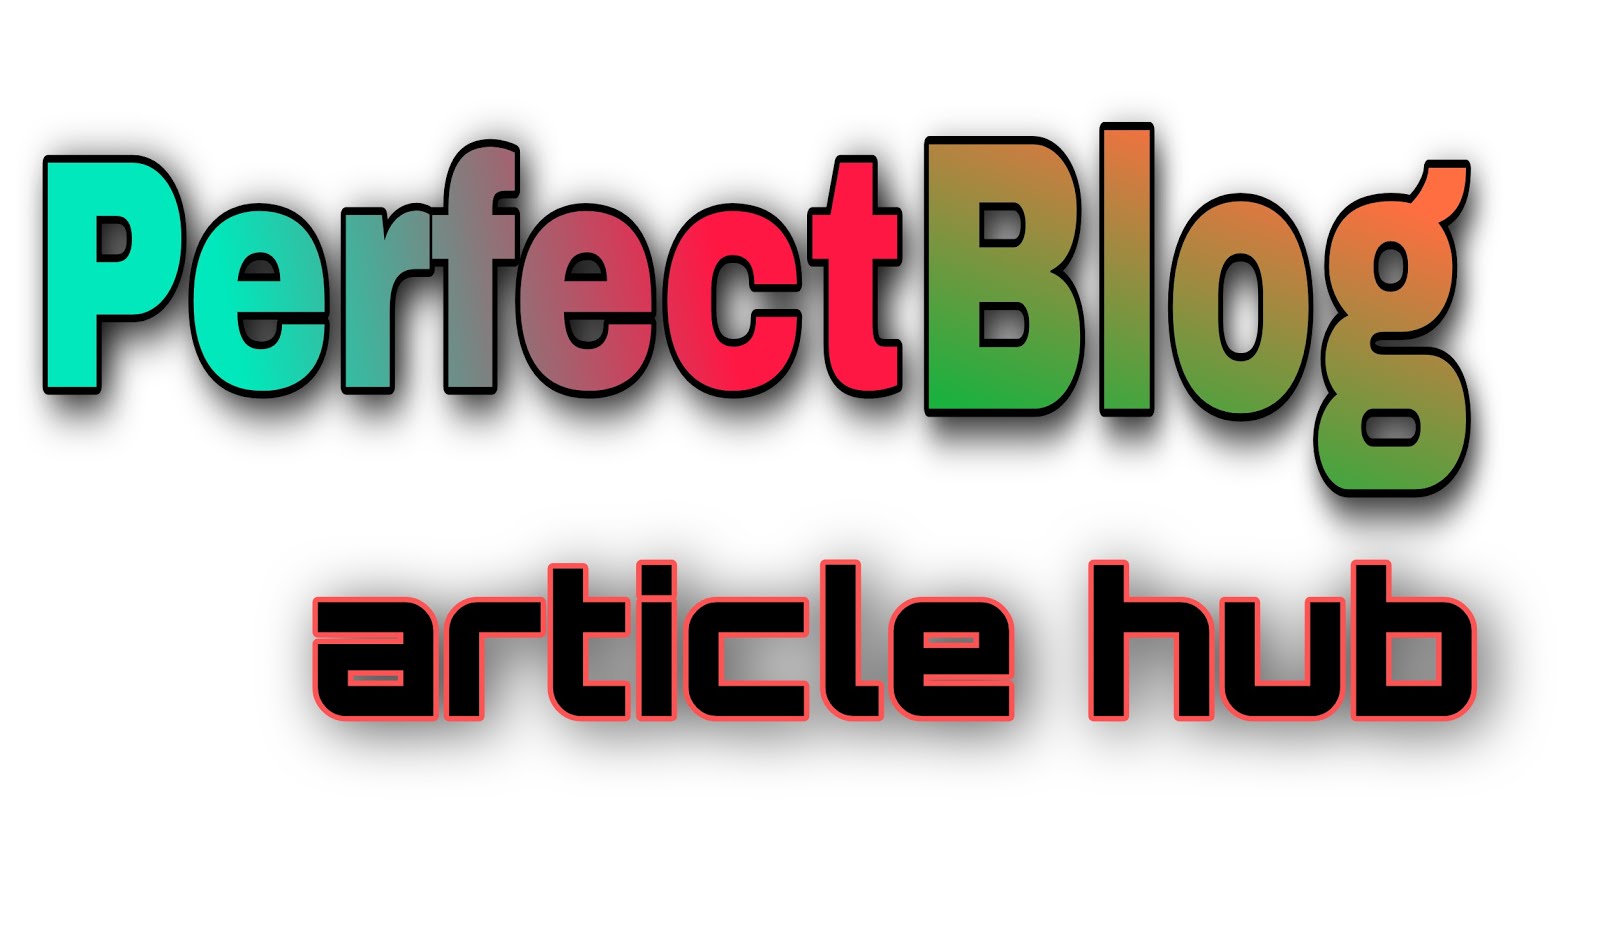 Perfect blog